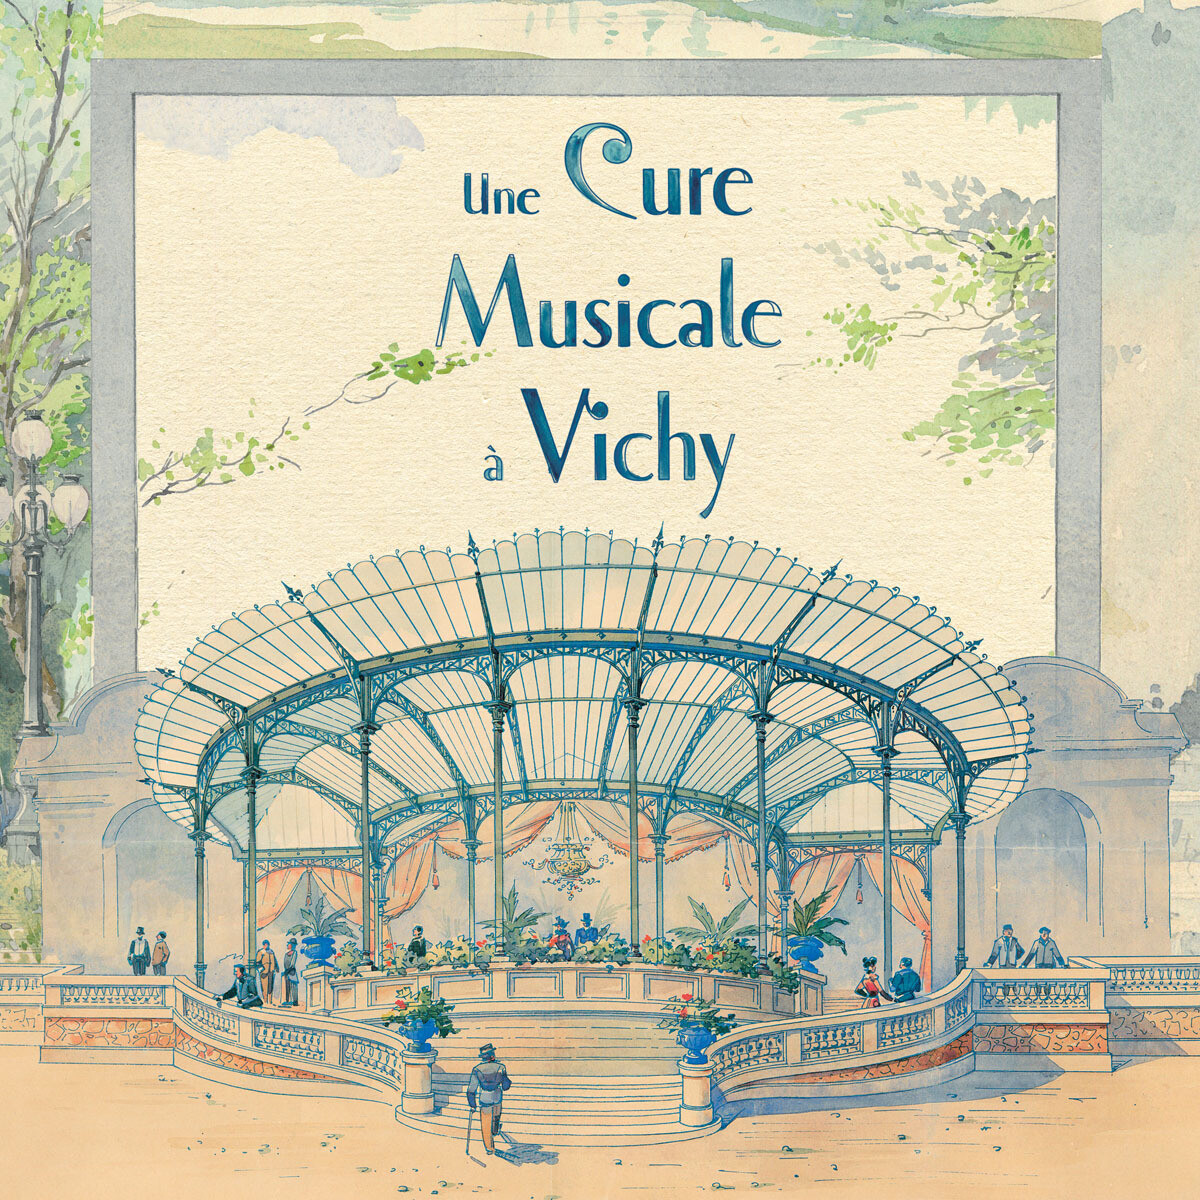 Une Cure musicale à Vichy